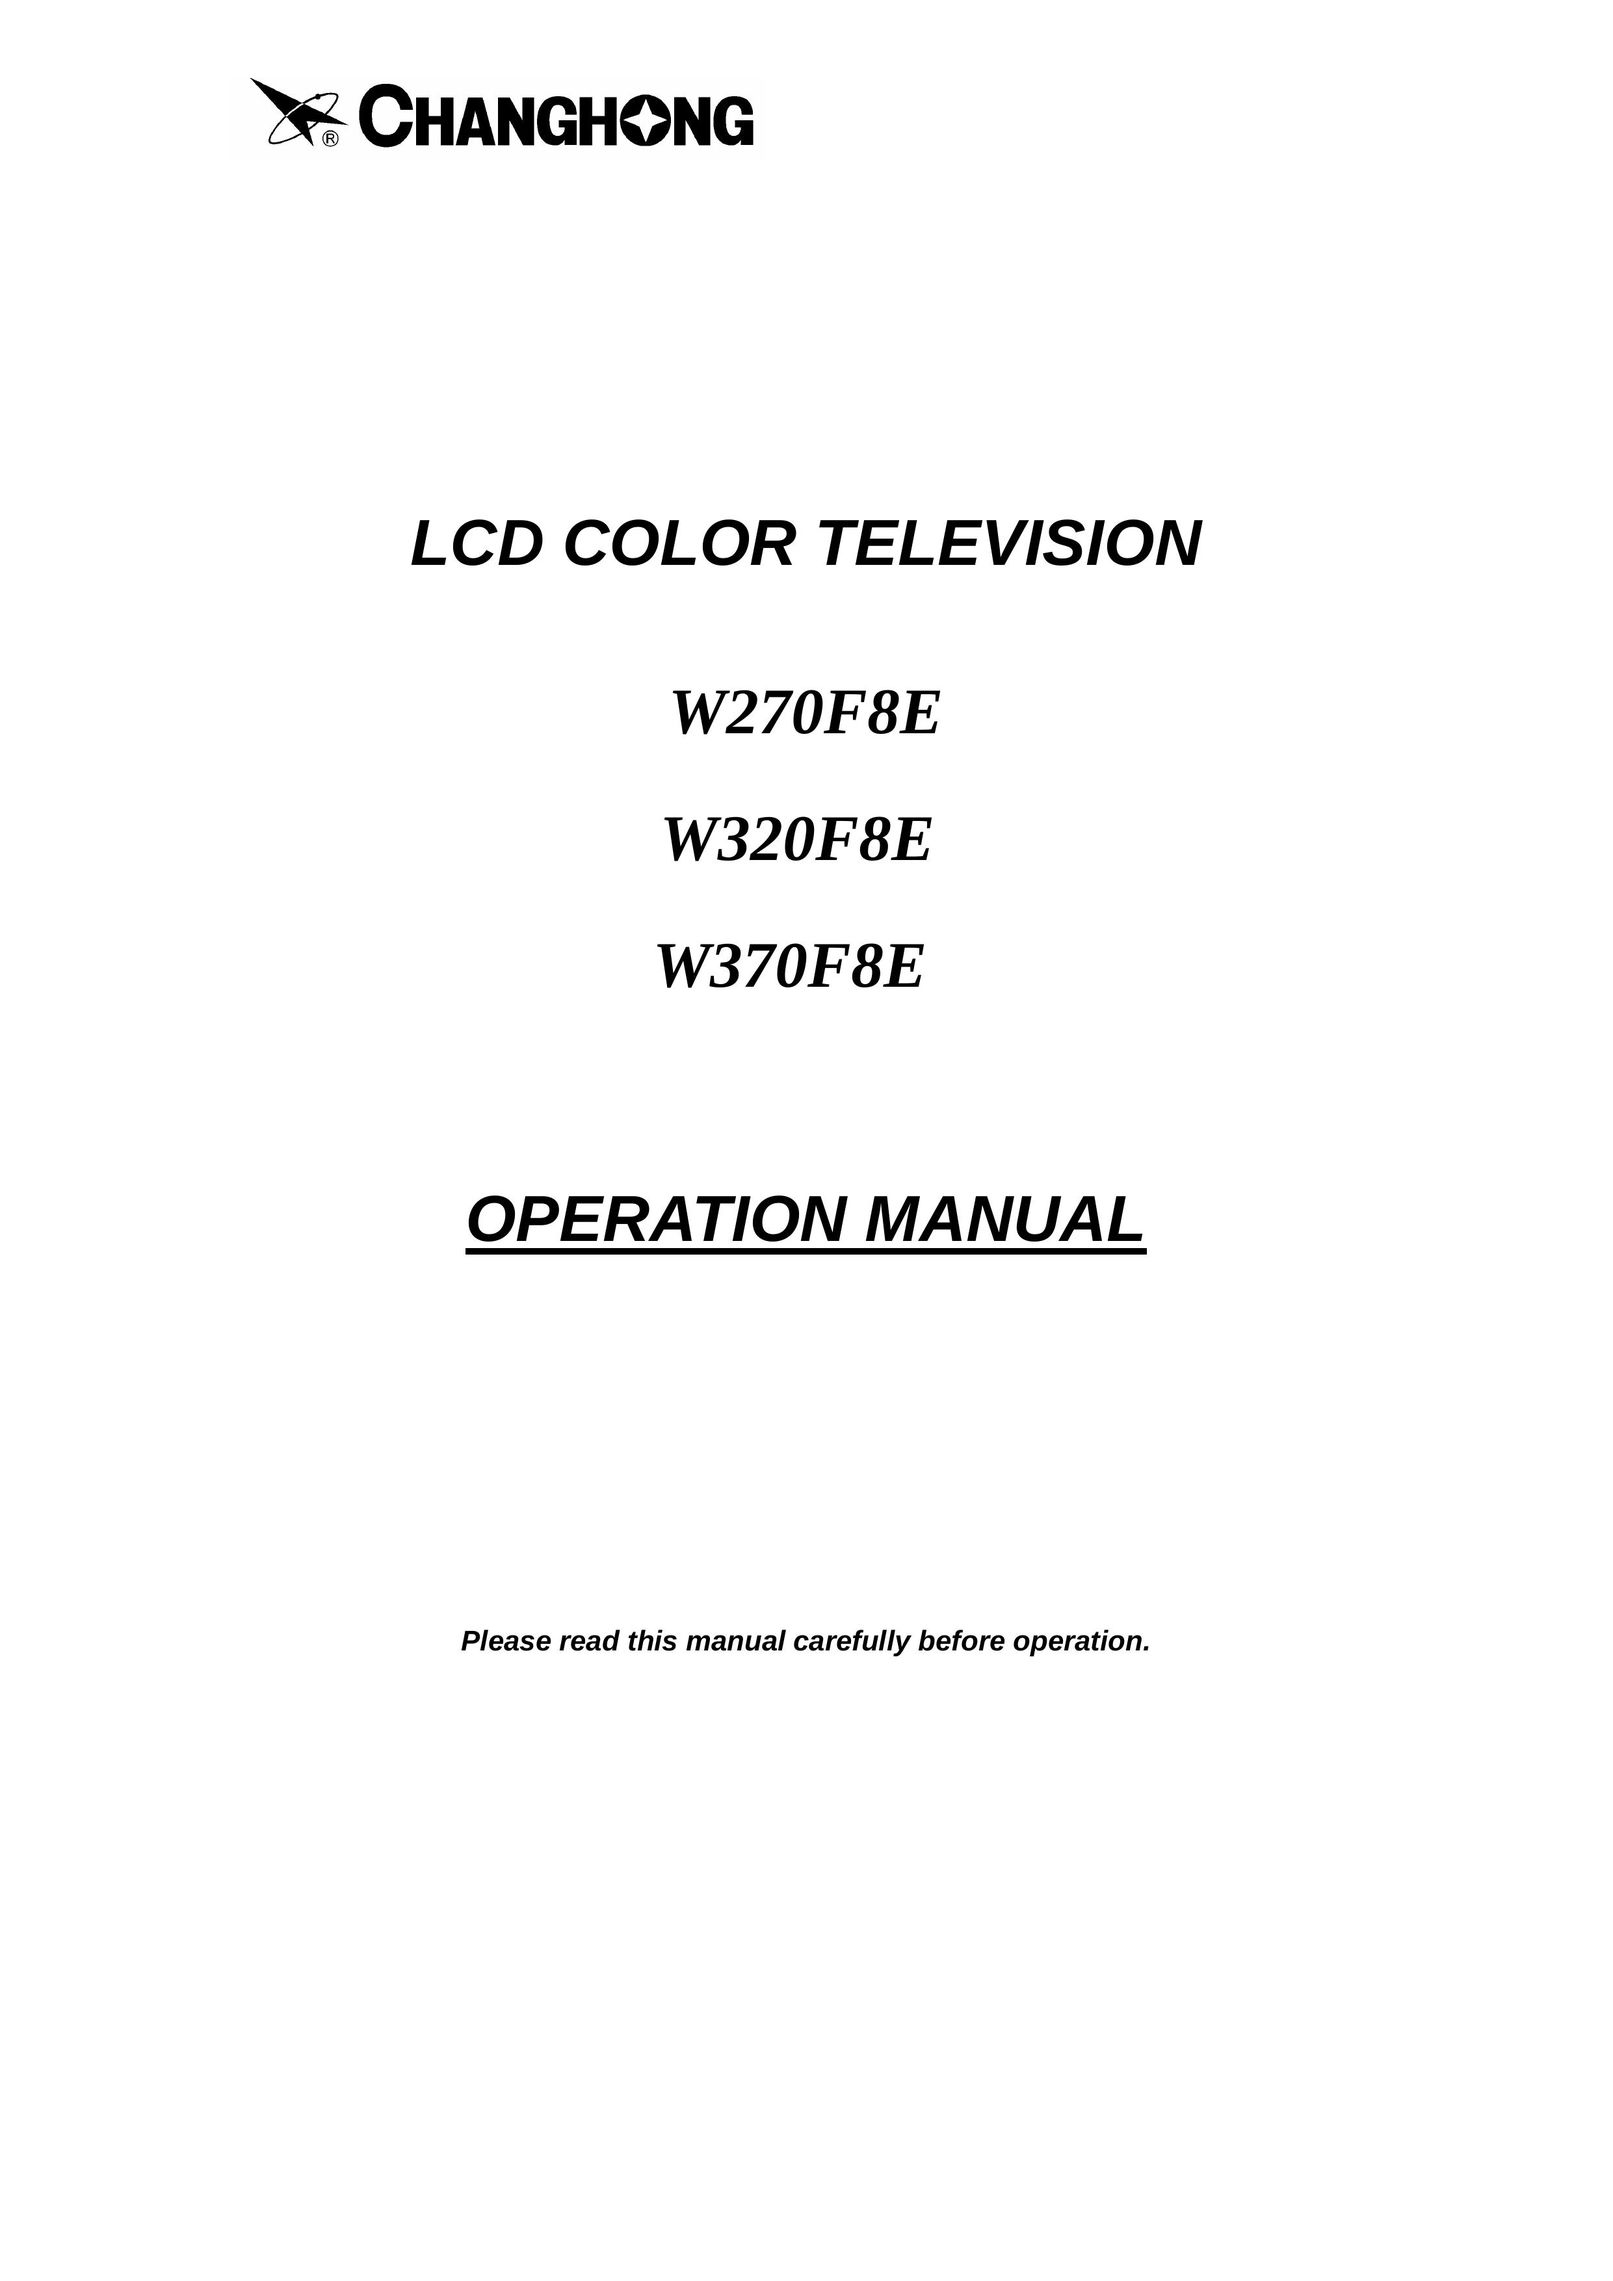 Changhong Electric W270F8E, W320F8E, W370F8E Flat Panel Television User Manual